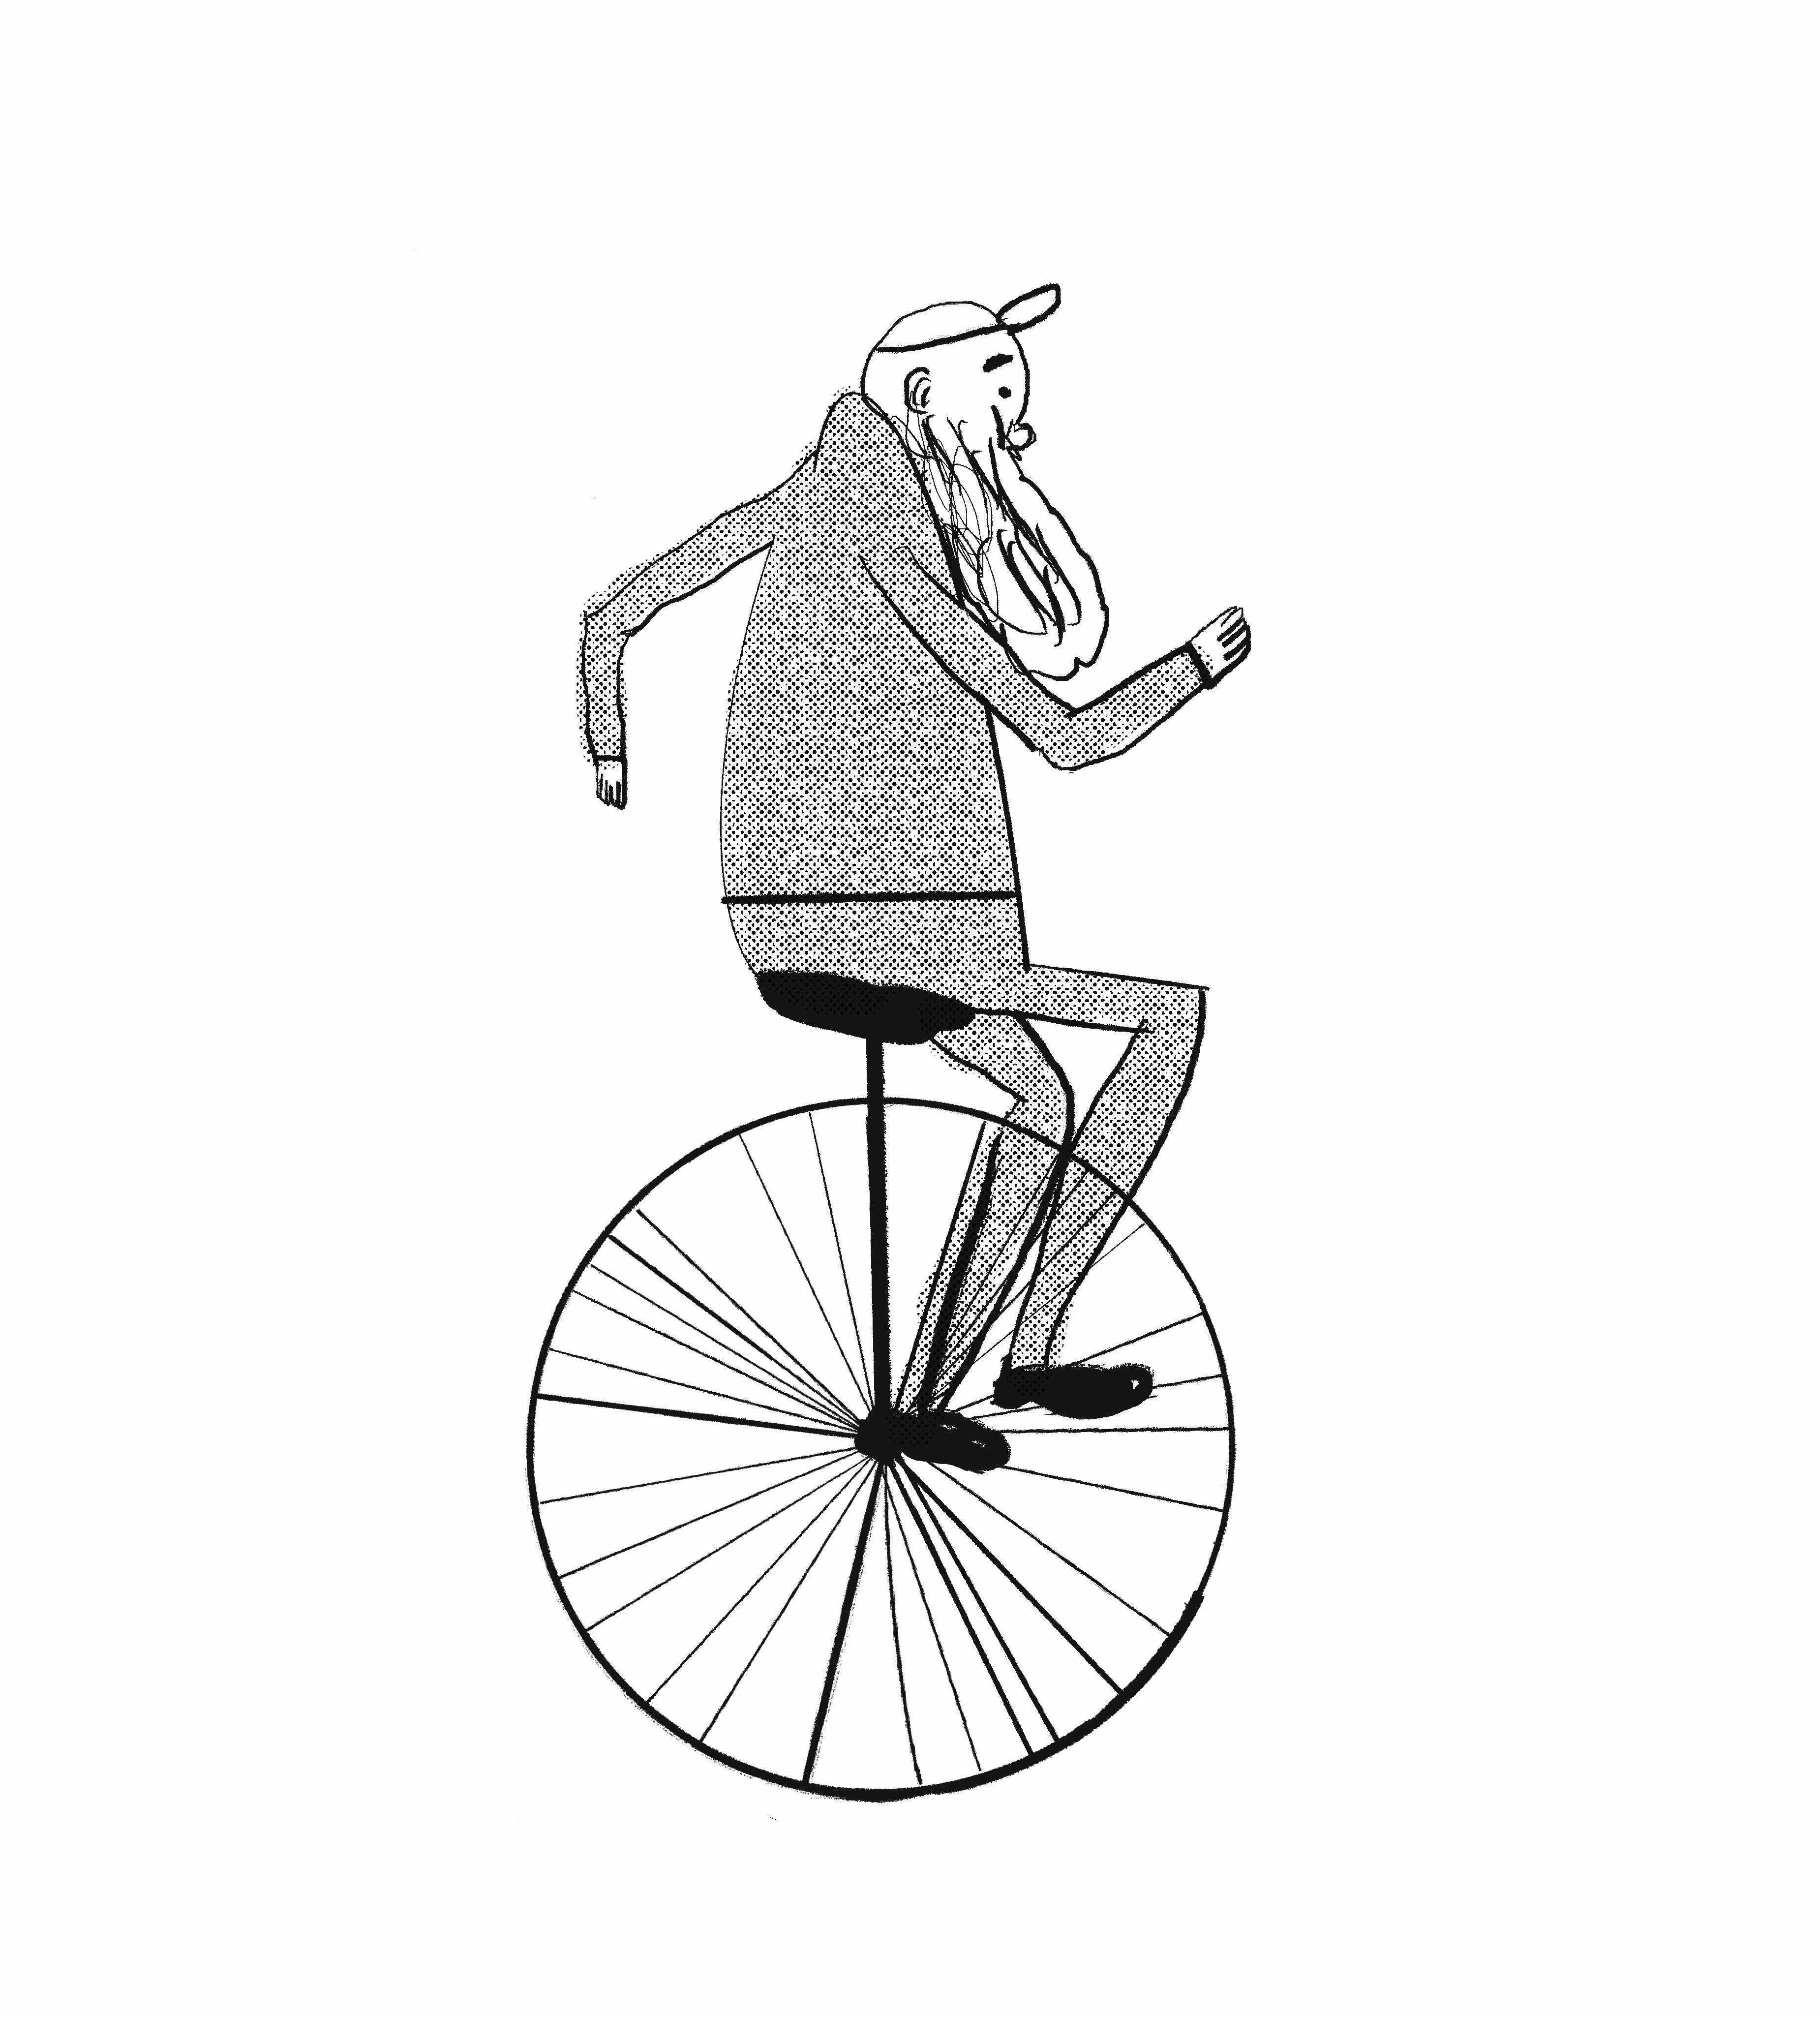 Bicycle wheel rim, Tire, Sleeve